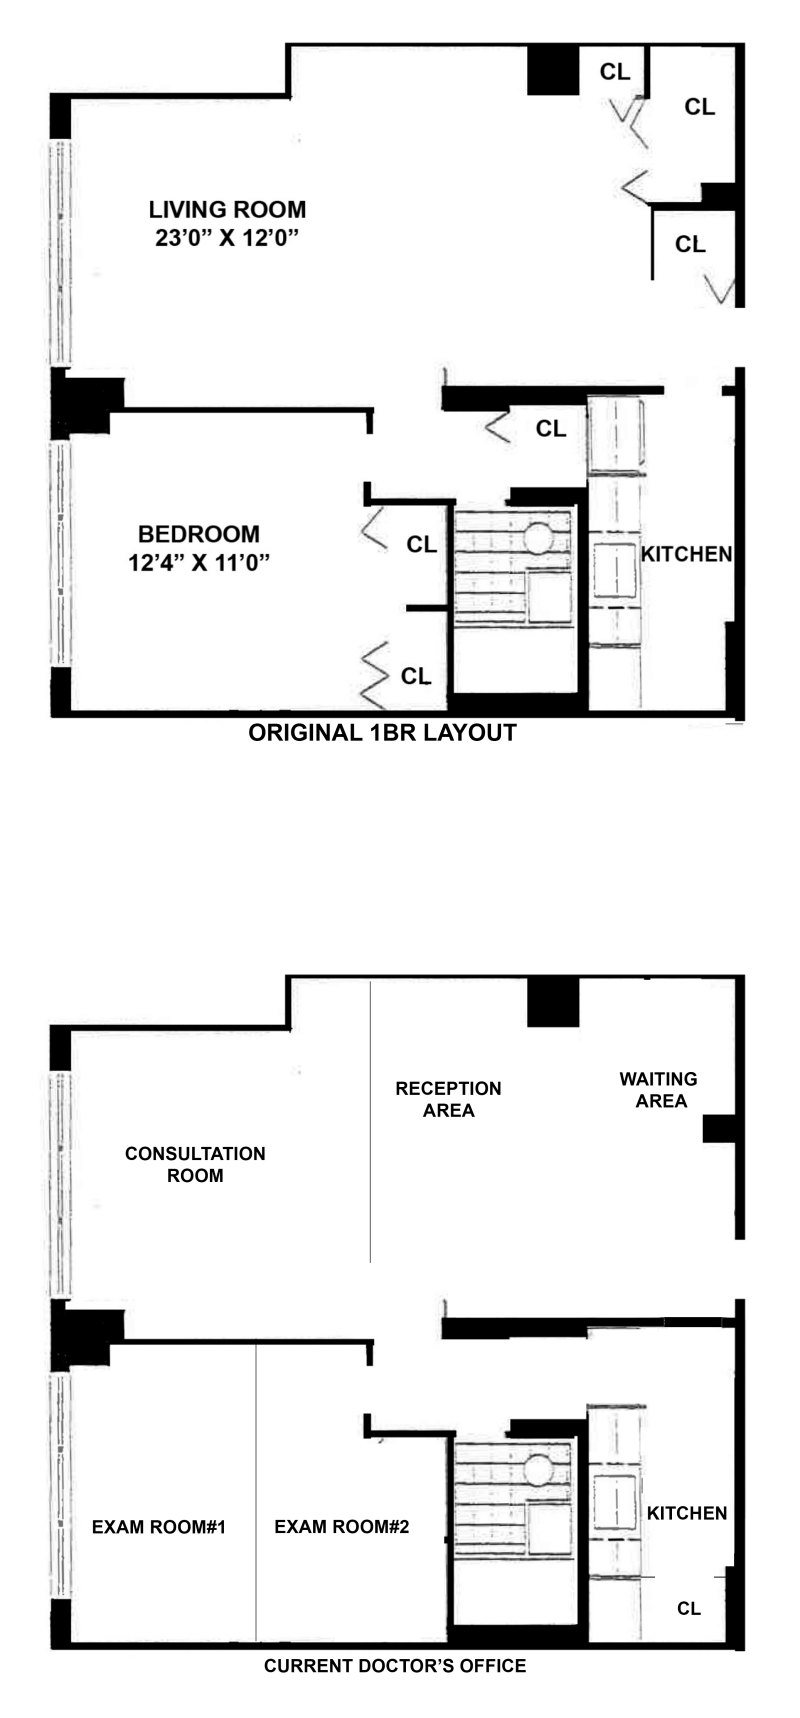 Floorplan for 15 West 72nd Street